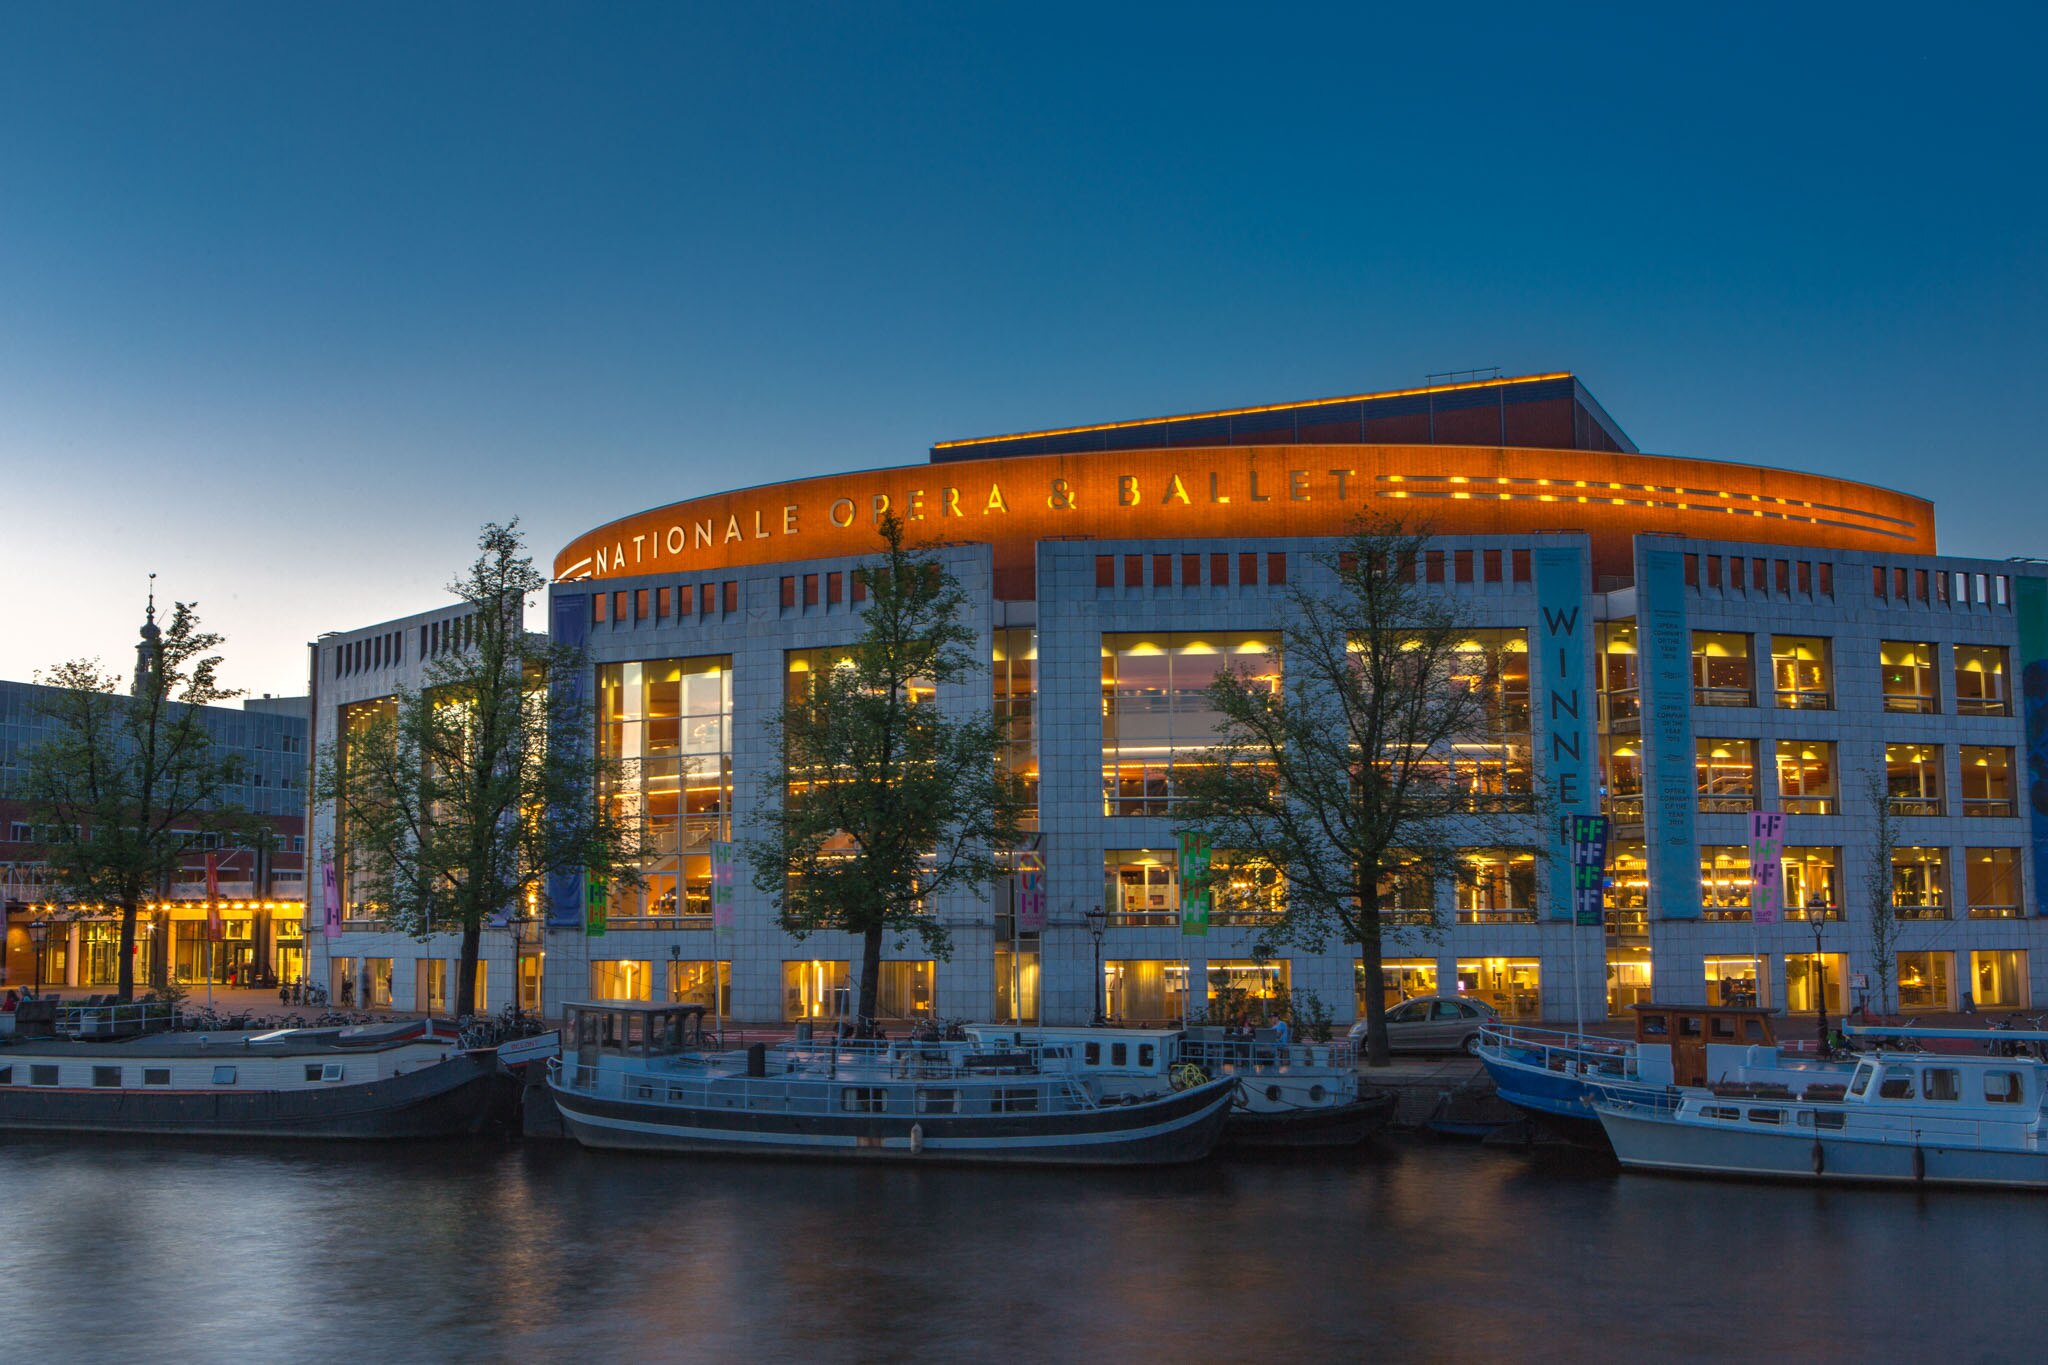 Dutch National Opera and Ballet